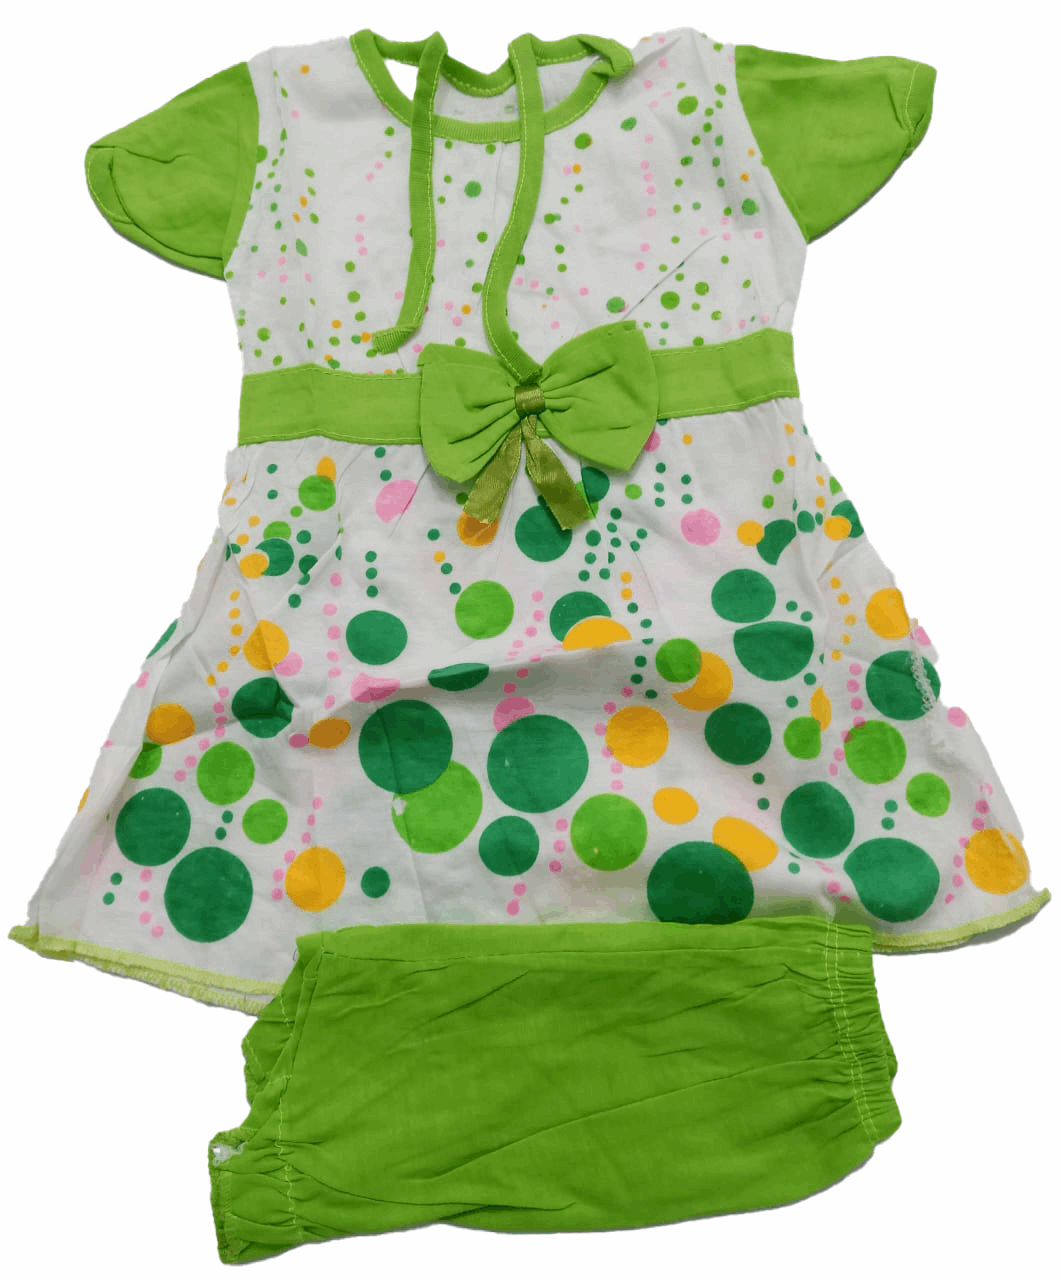 Beautiful Super Comfy Newborn Up & Down Clothes Matching Set (Dress & Pants) for Baby Girls | BLC18d